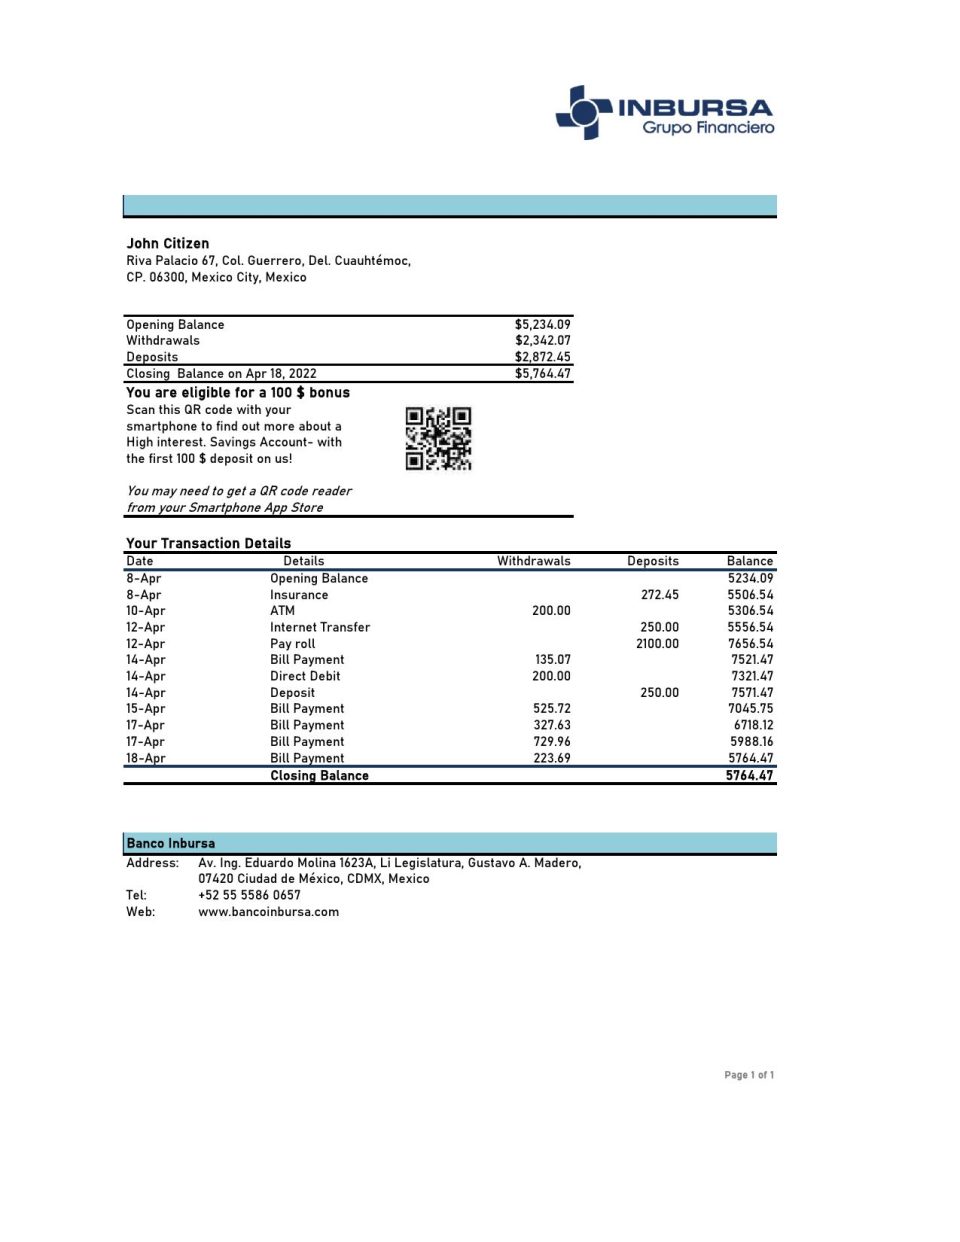 Mexico Inbursa bank statement Excel and PDF template, version 2